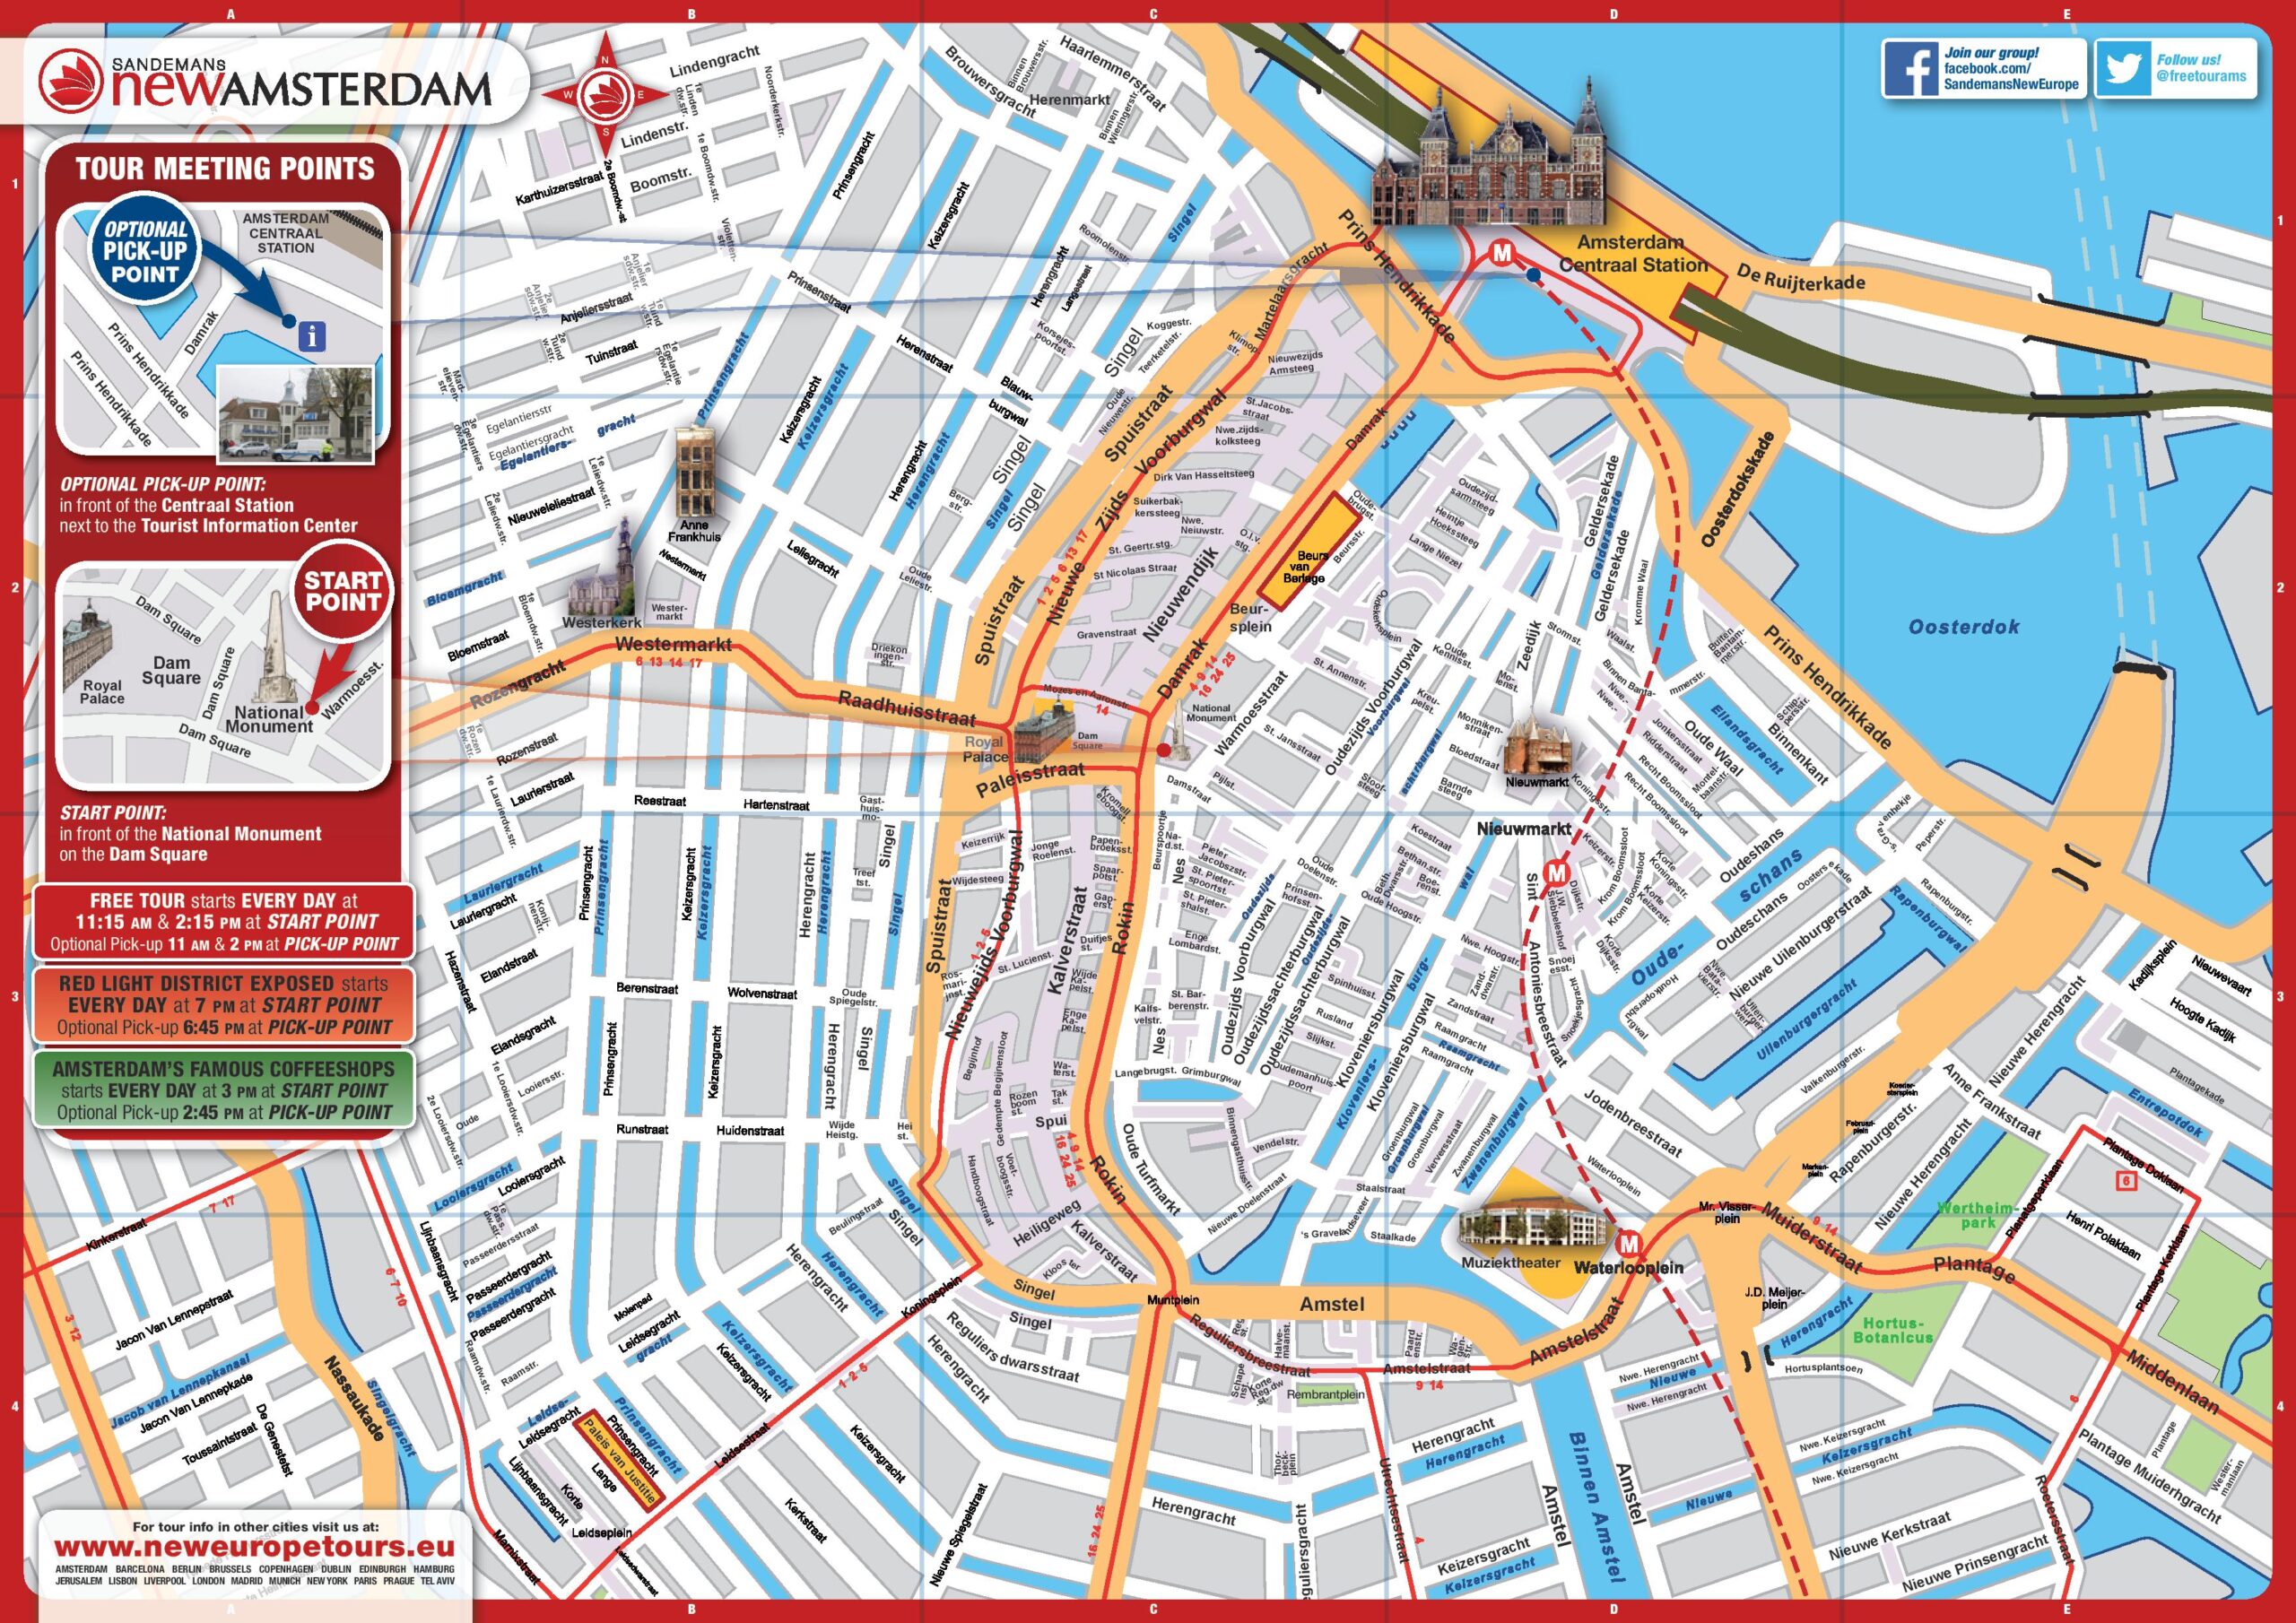 Amsterdam city map